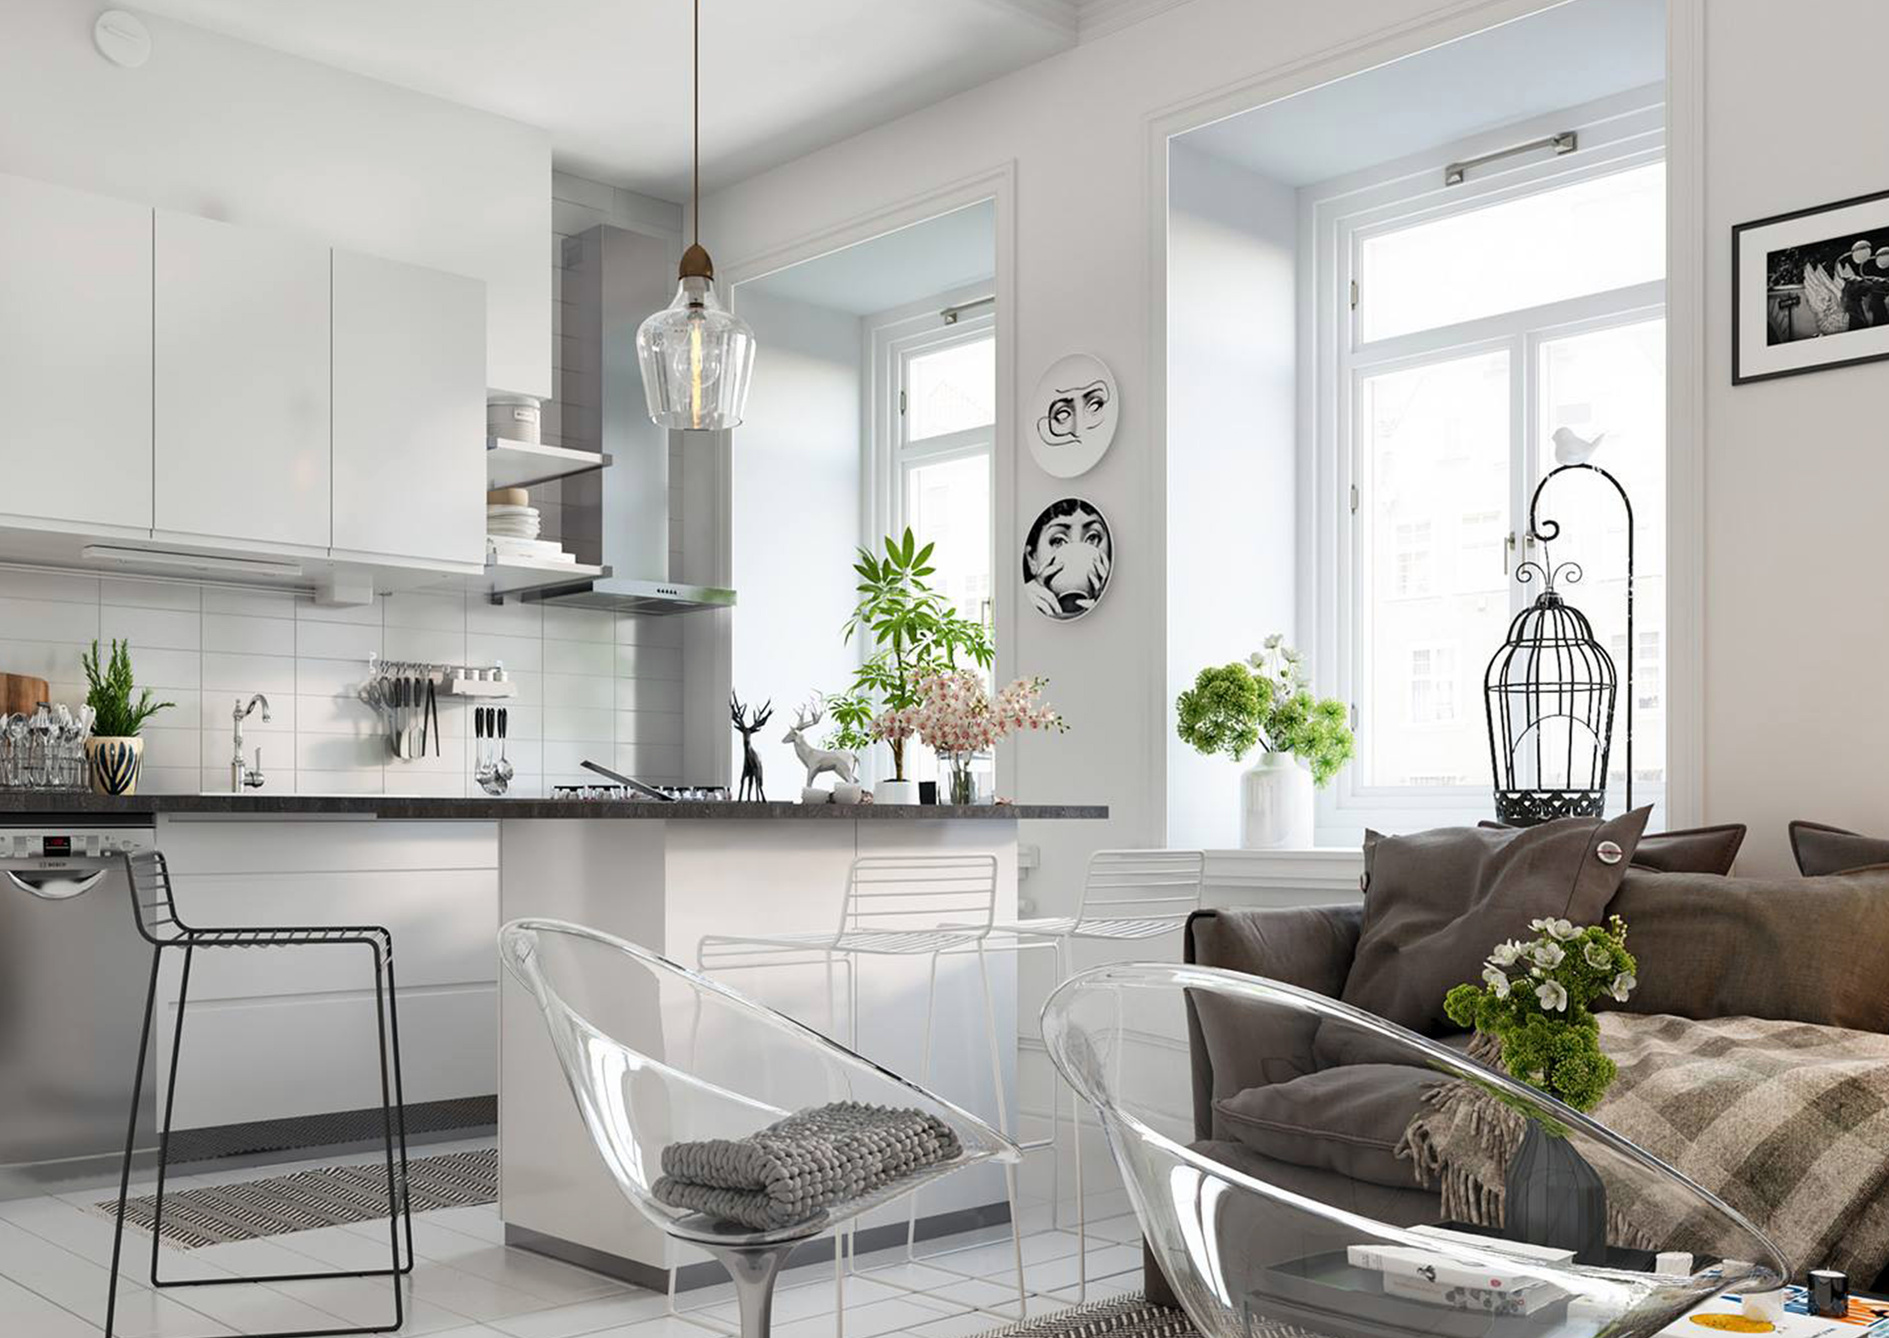 Modern Kitchen and Living Room Interior Design